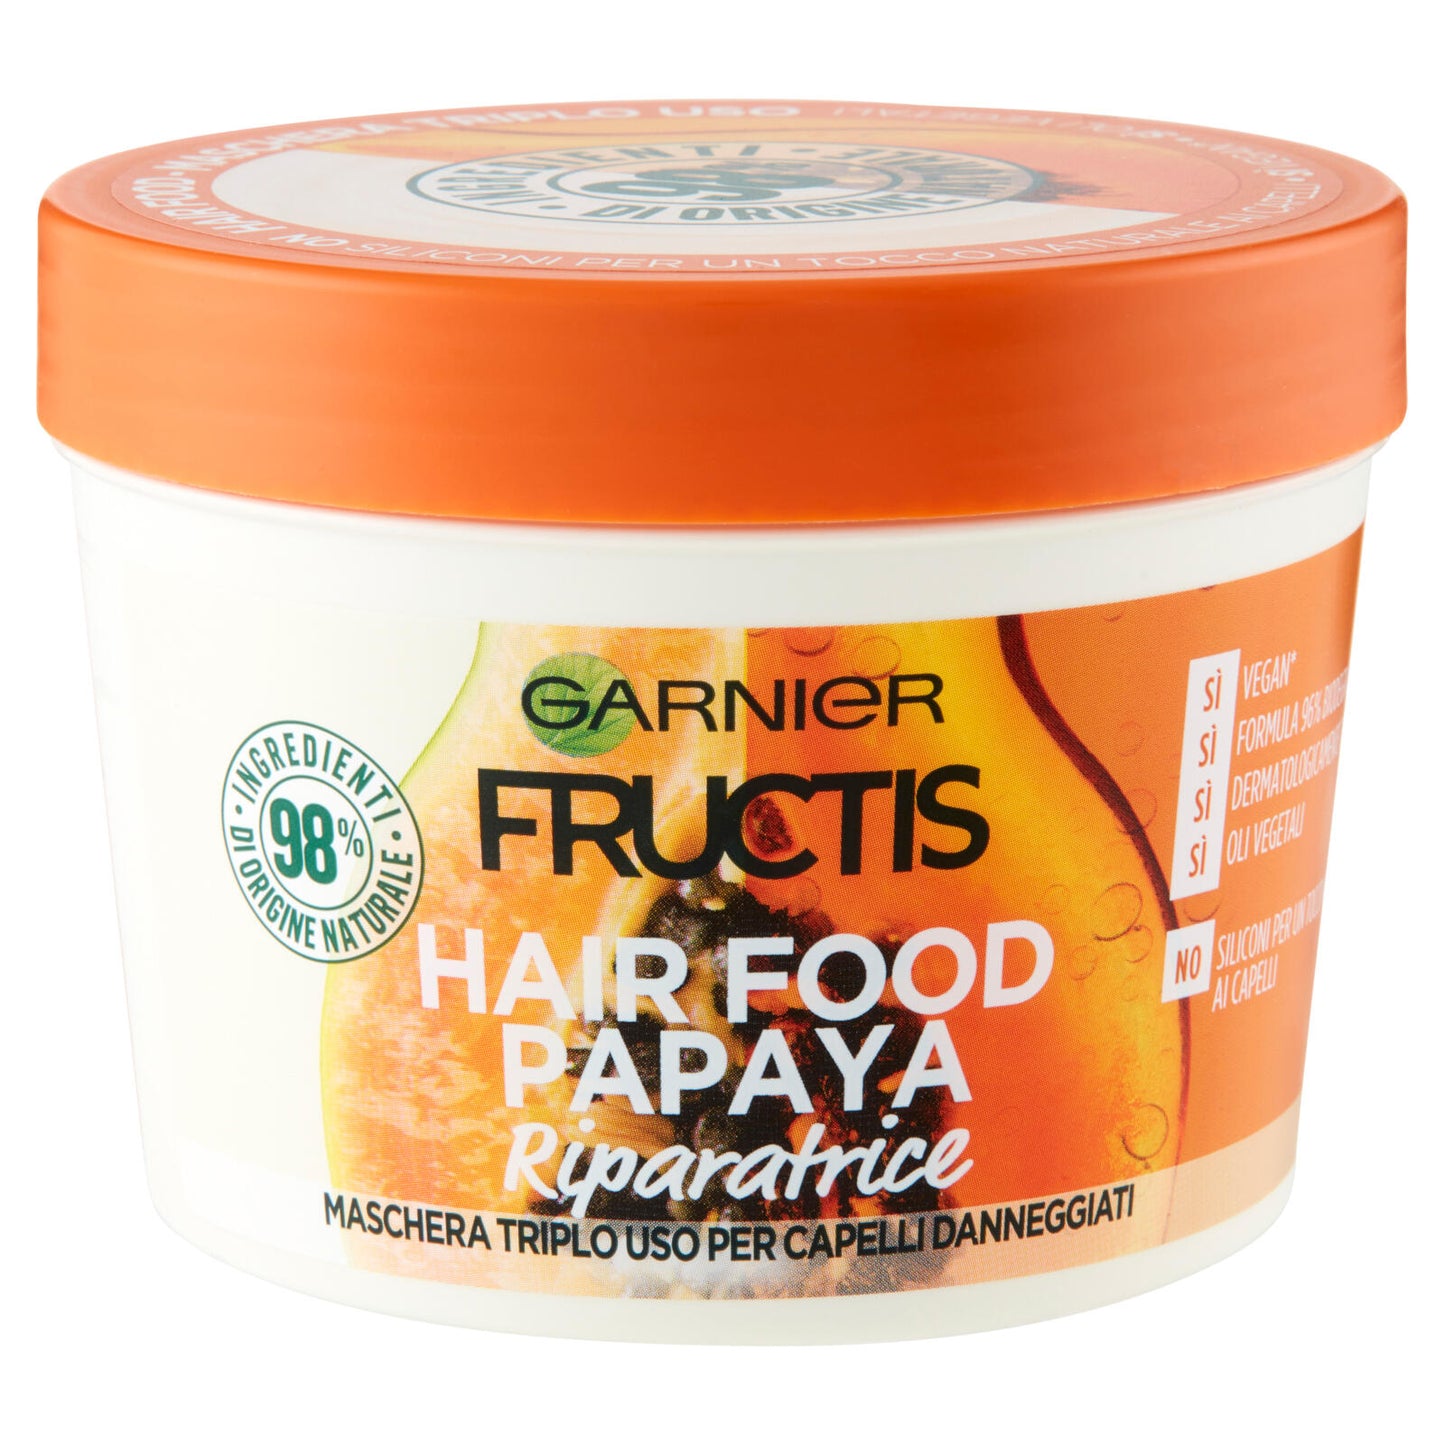 Garnier Maschera Riparatrice Fructis Hair Food, 3in1 Capelli Danneggiati, Papaya